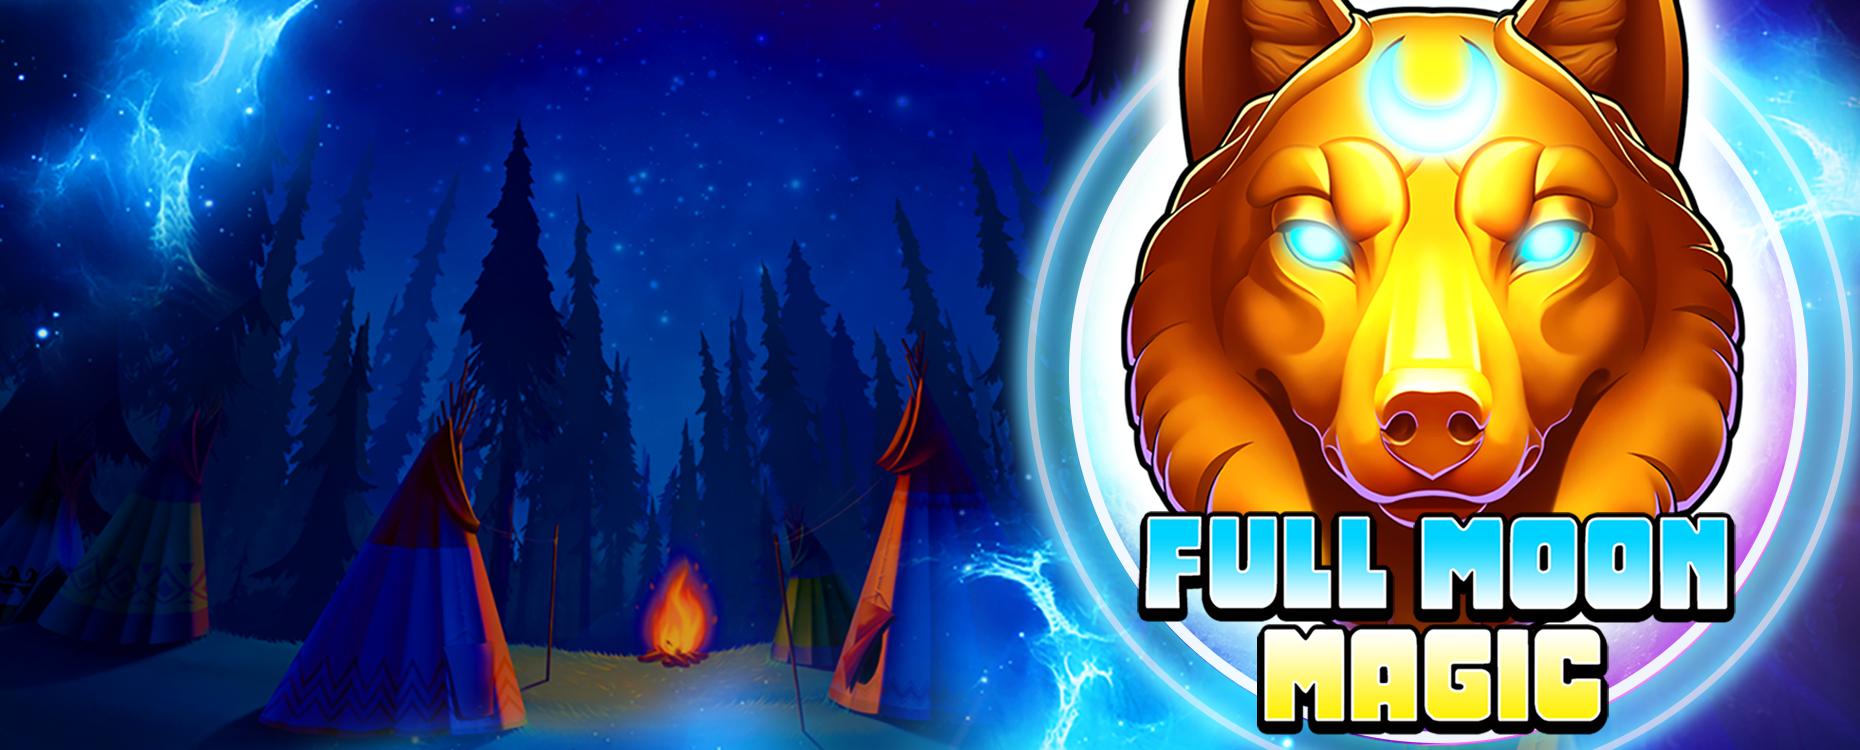 Full Moon Magic | Promotion pack | Online slot